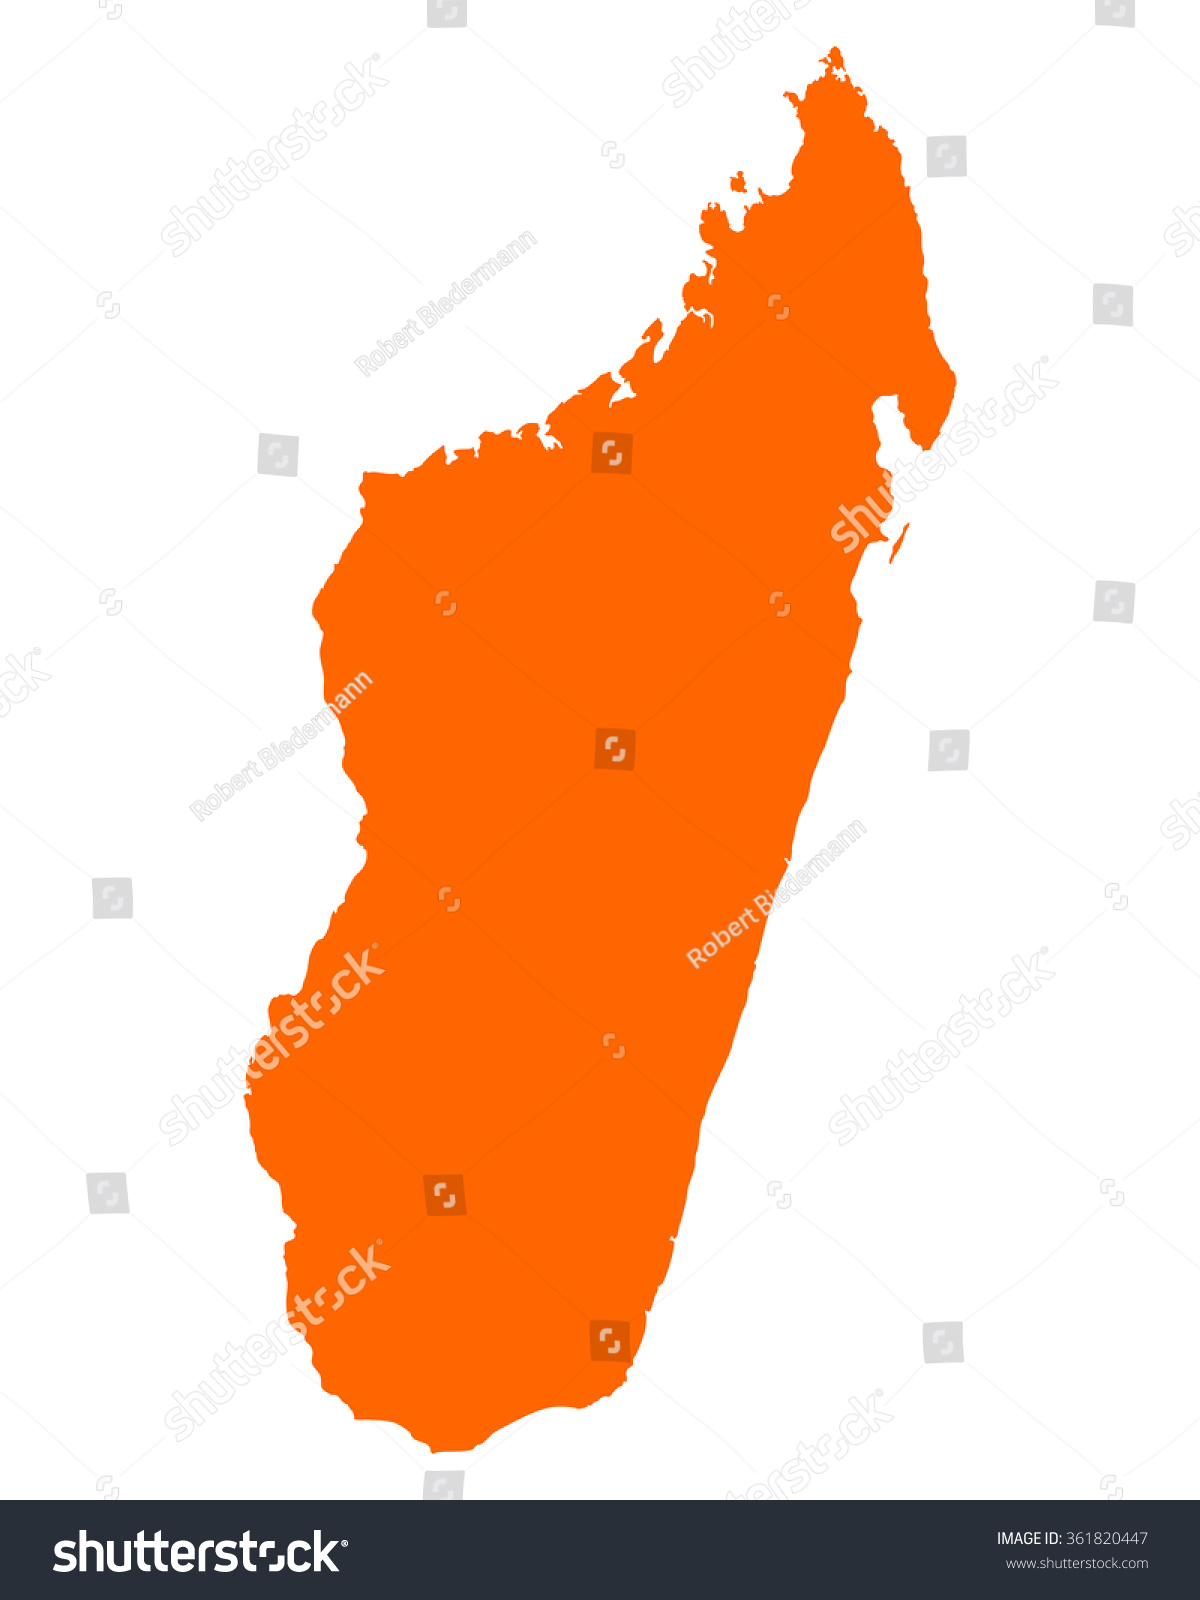 Map of Madagascar #361820447